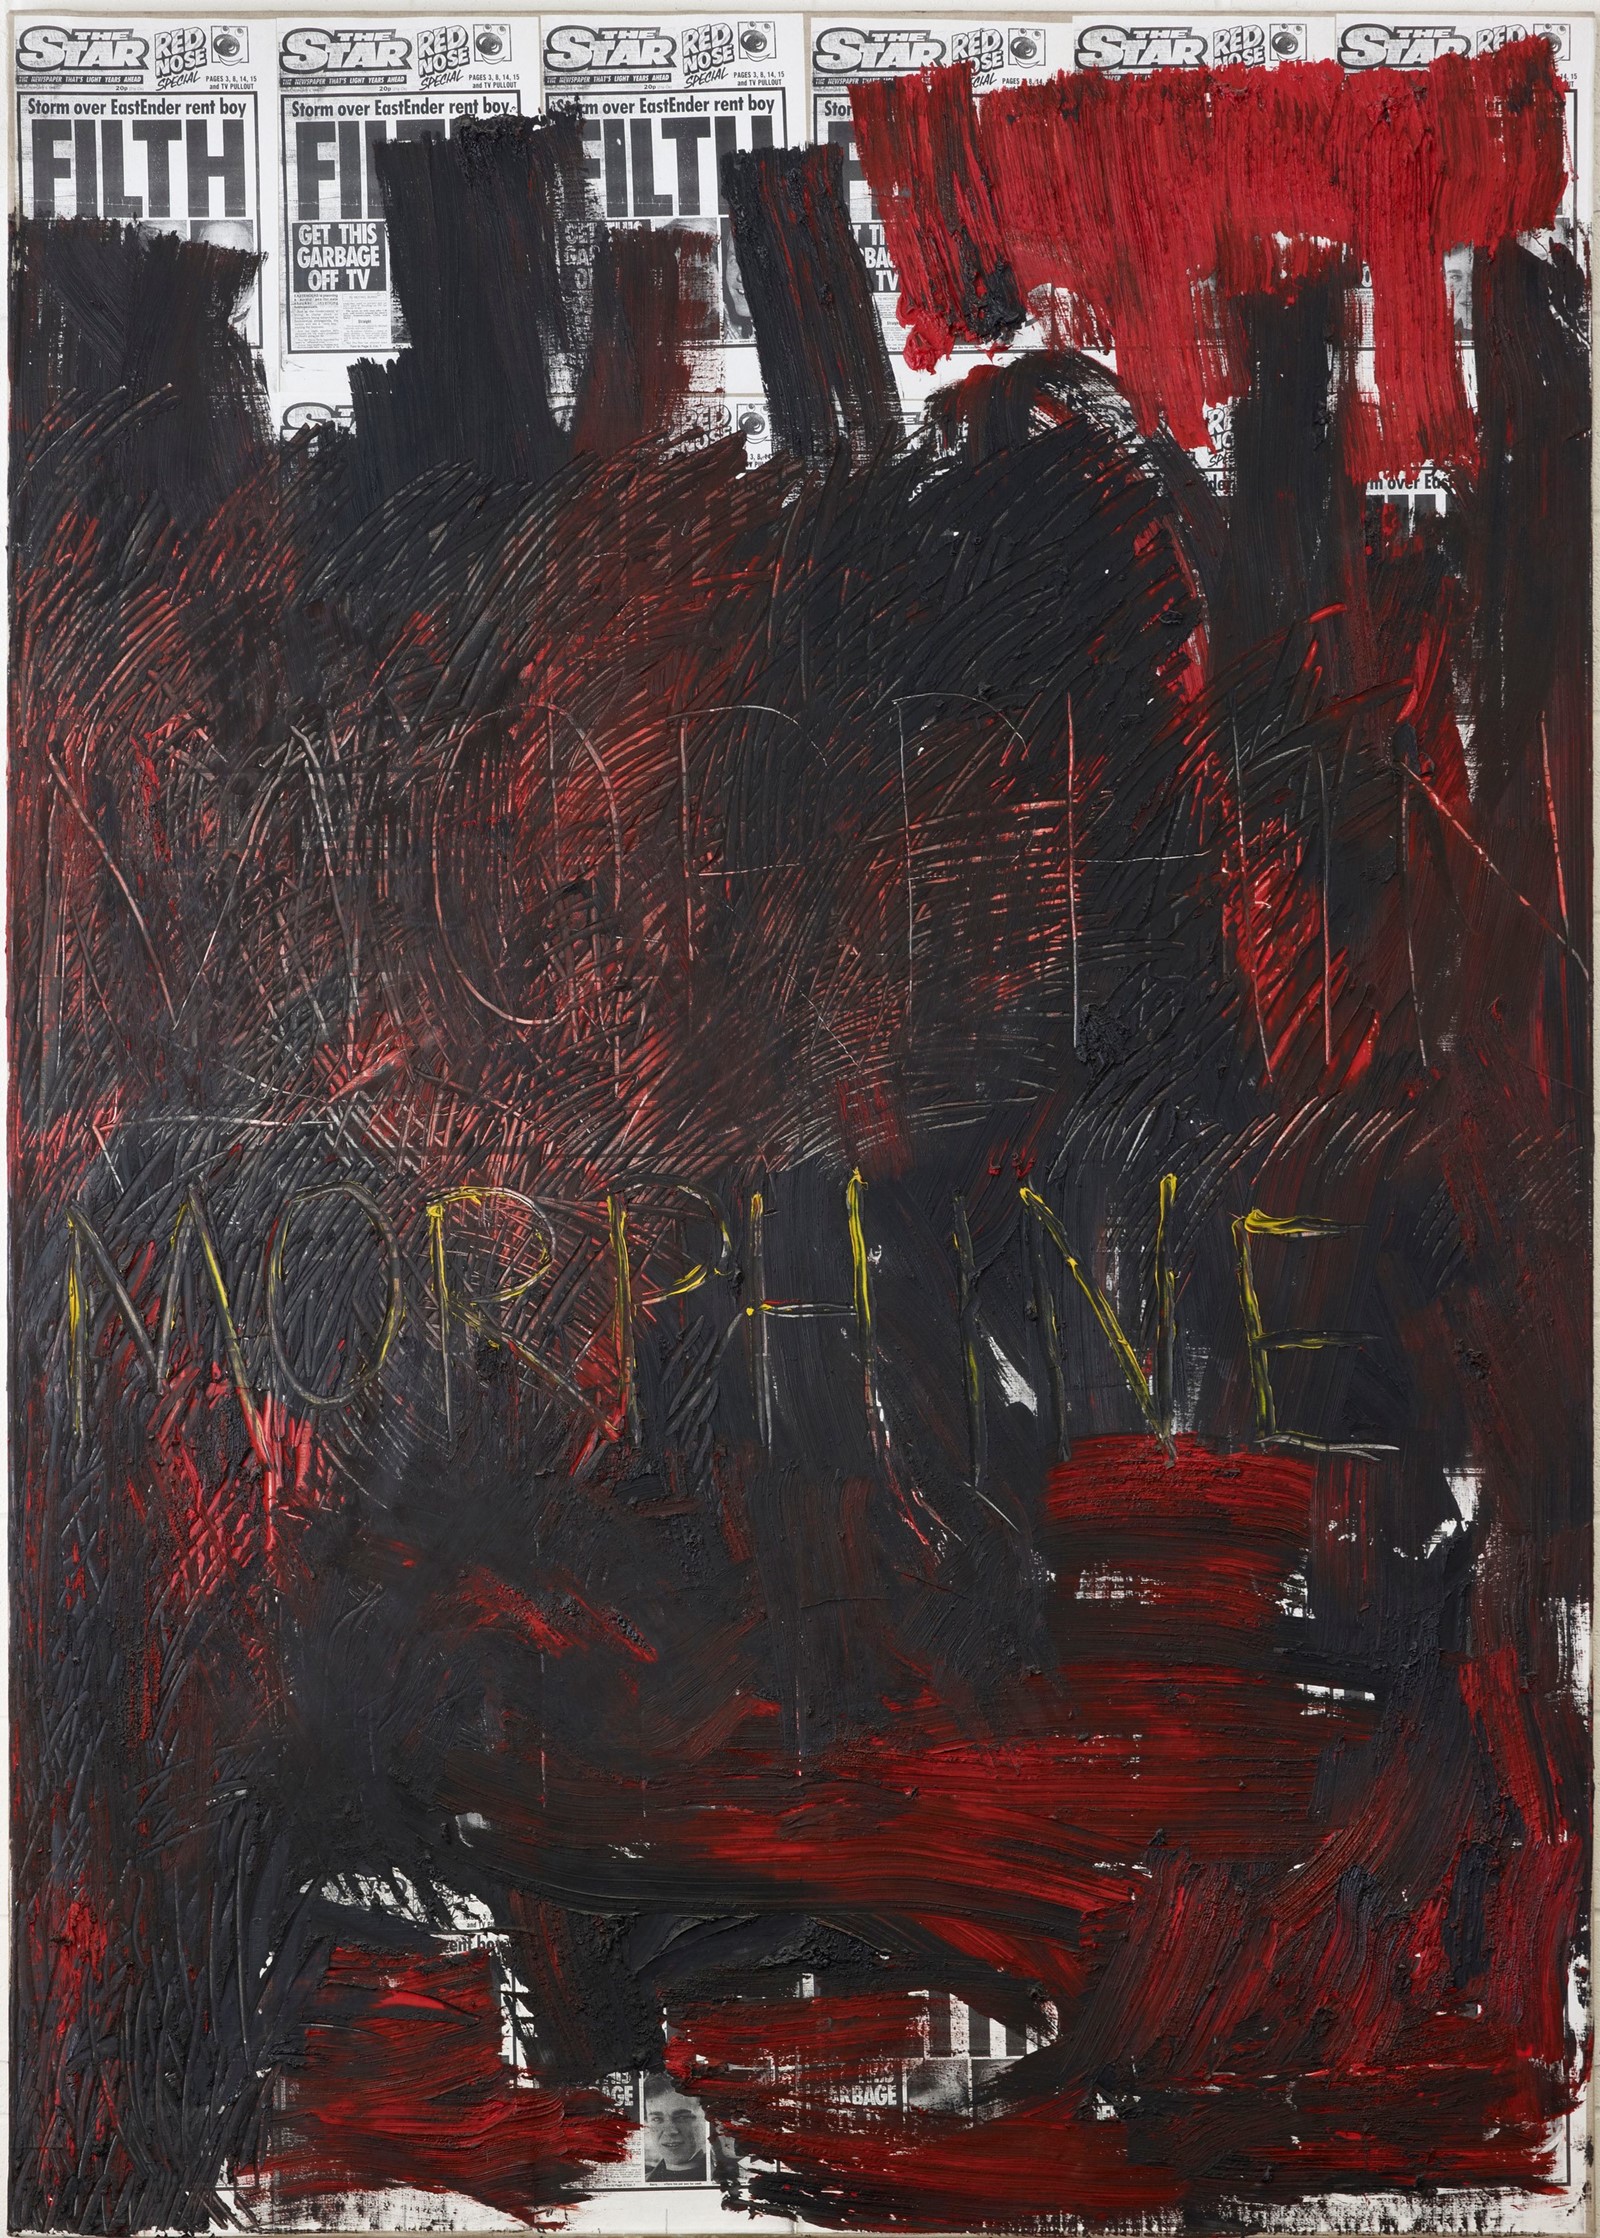 3. Morphine, 1992, Oil on canvas. 251.5 x 179cm, A